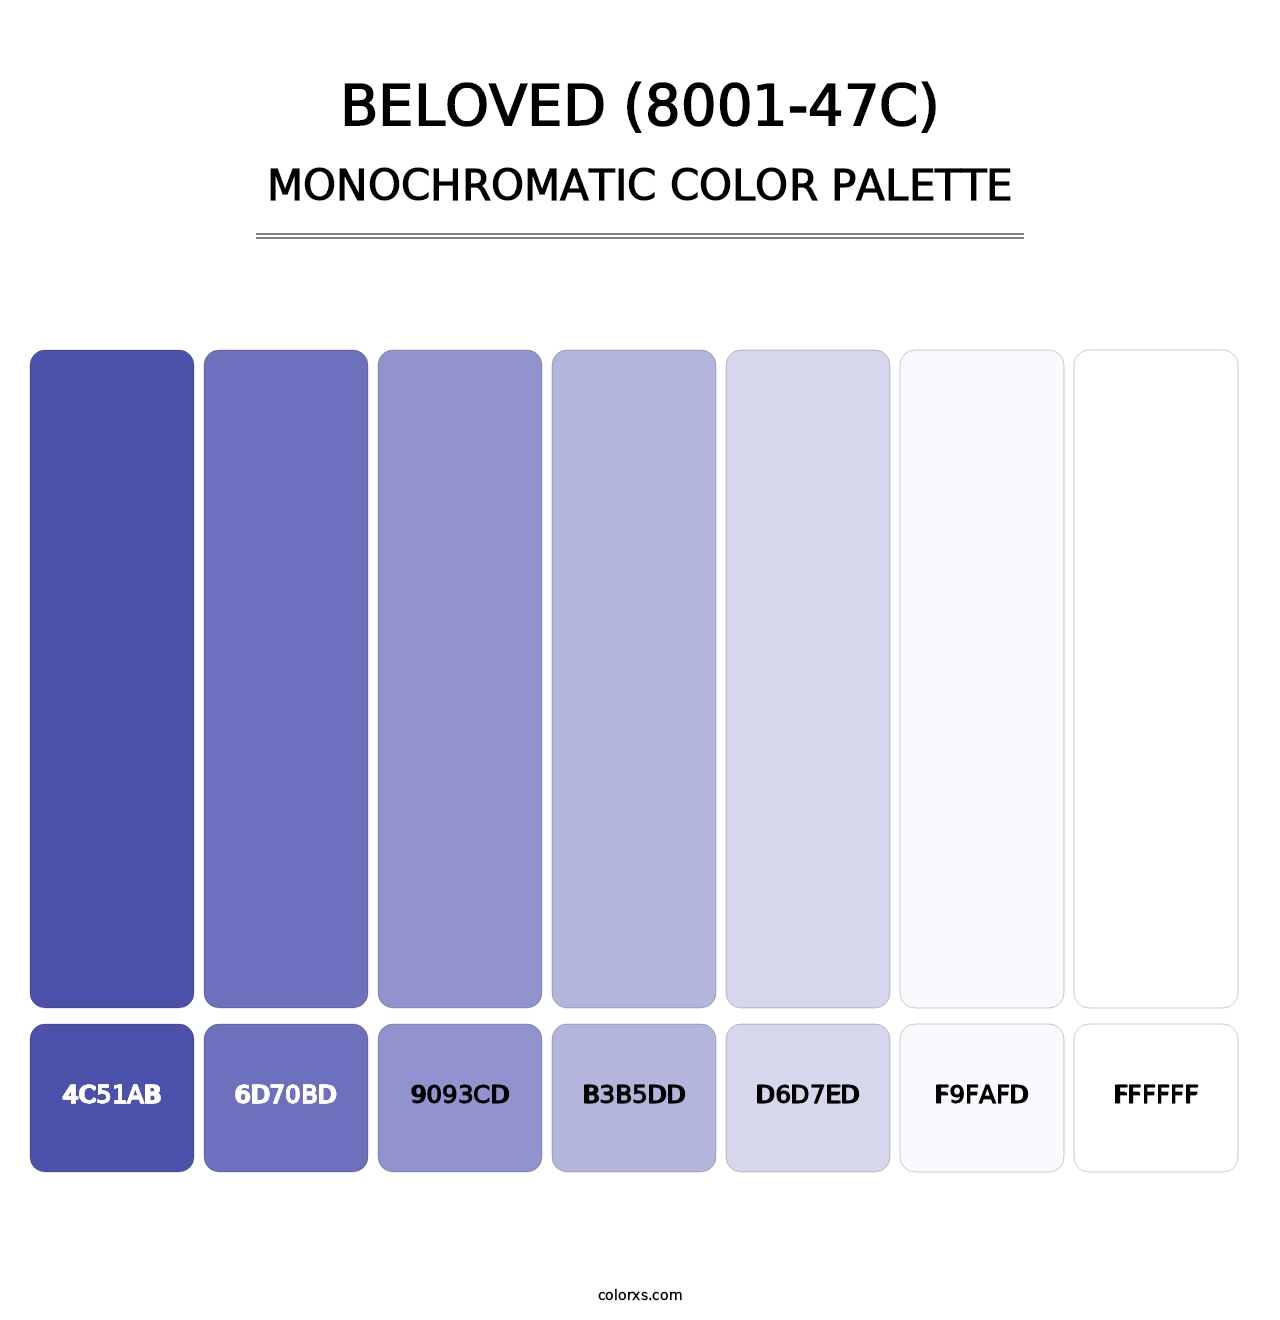 Beloved (8001-47C) - Monochromatic Color Palette